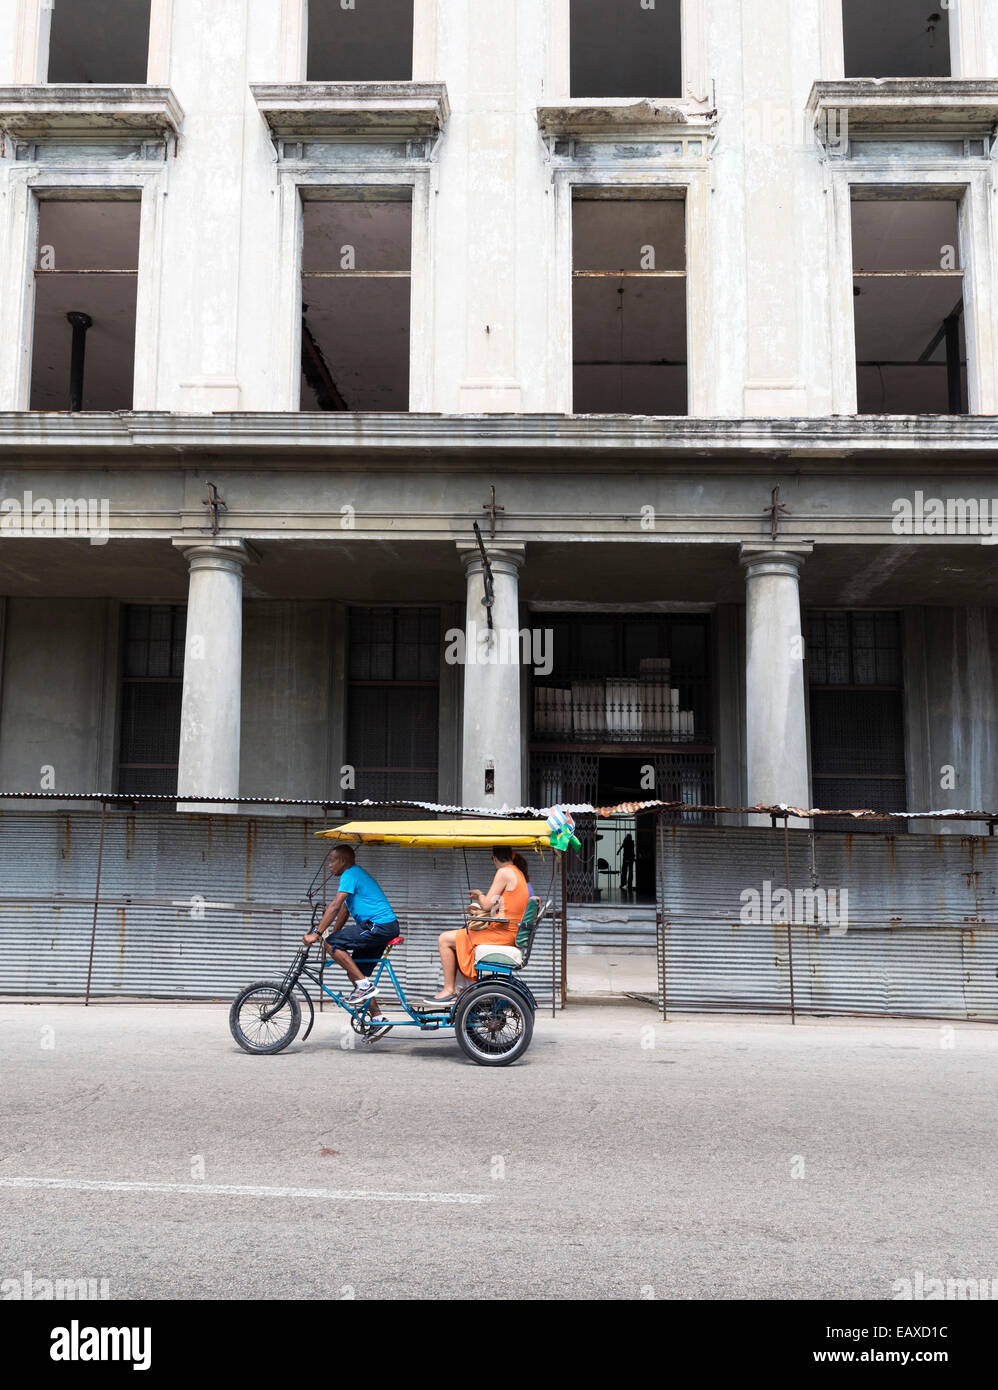 HAVANA - MAY 5, 2014: The urban cityscape, pedicab on the road on May 5, 2014 in Havana, Cuba Stock Photo